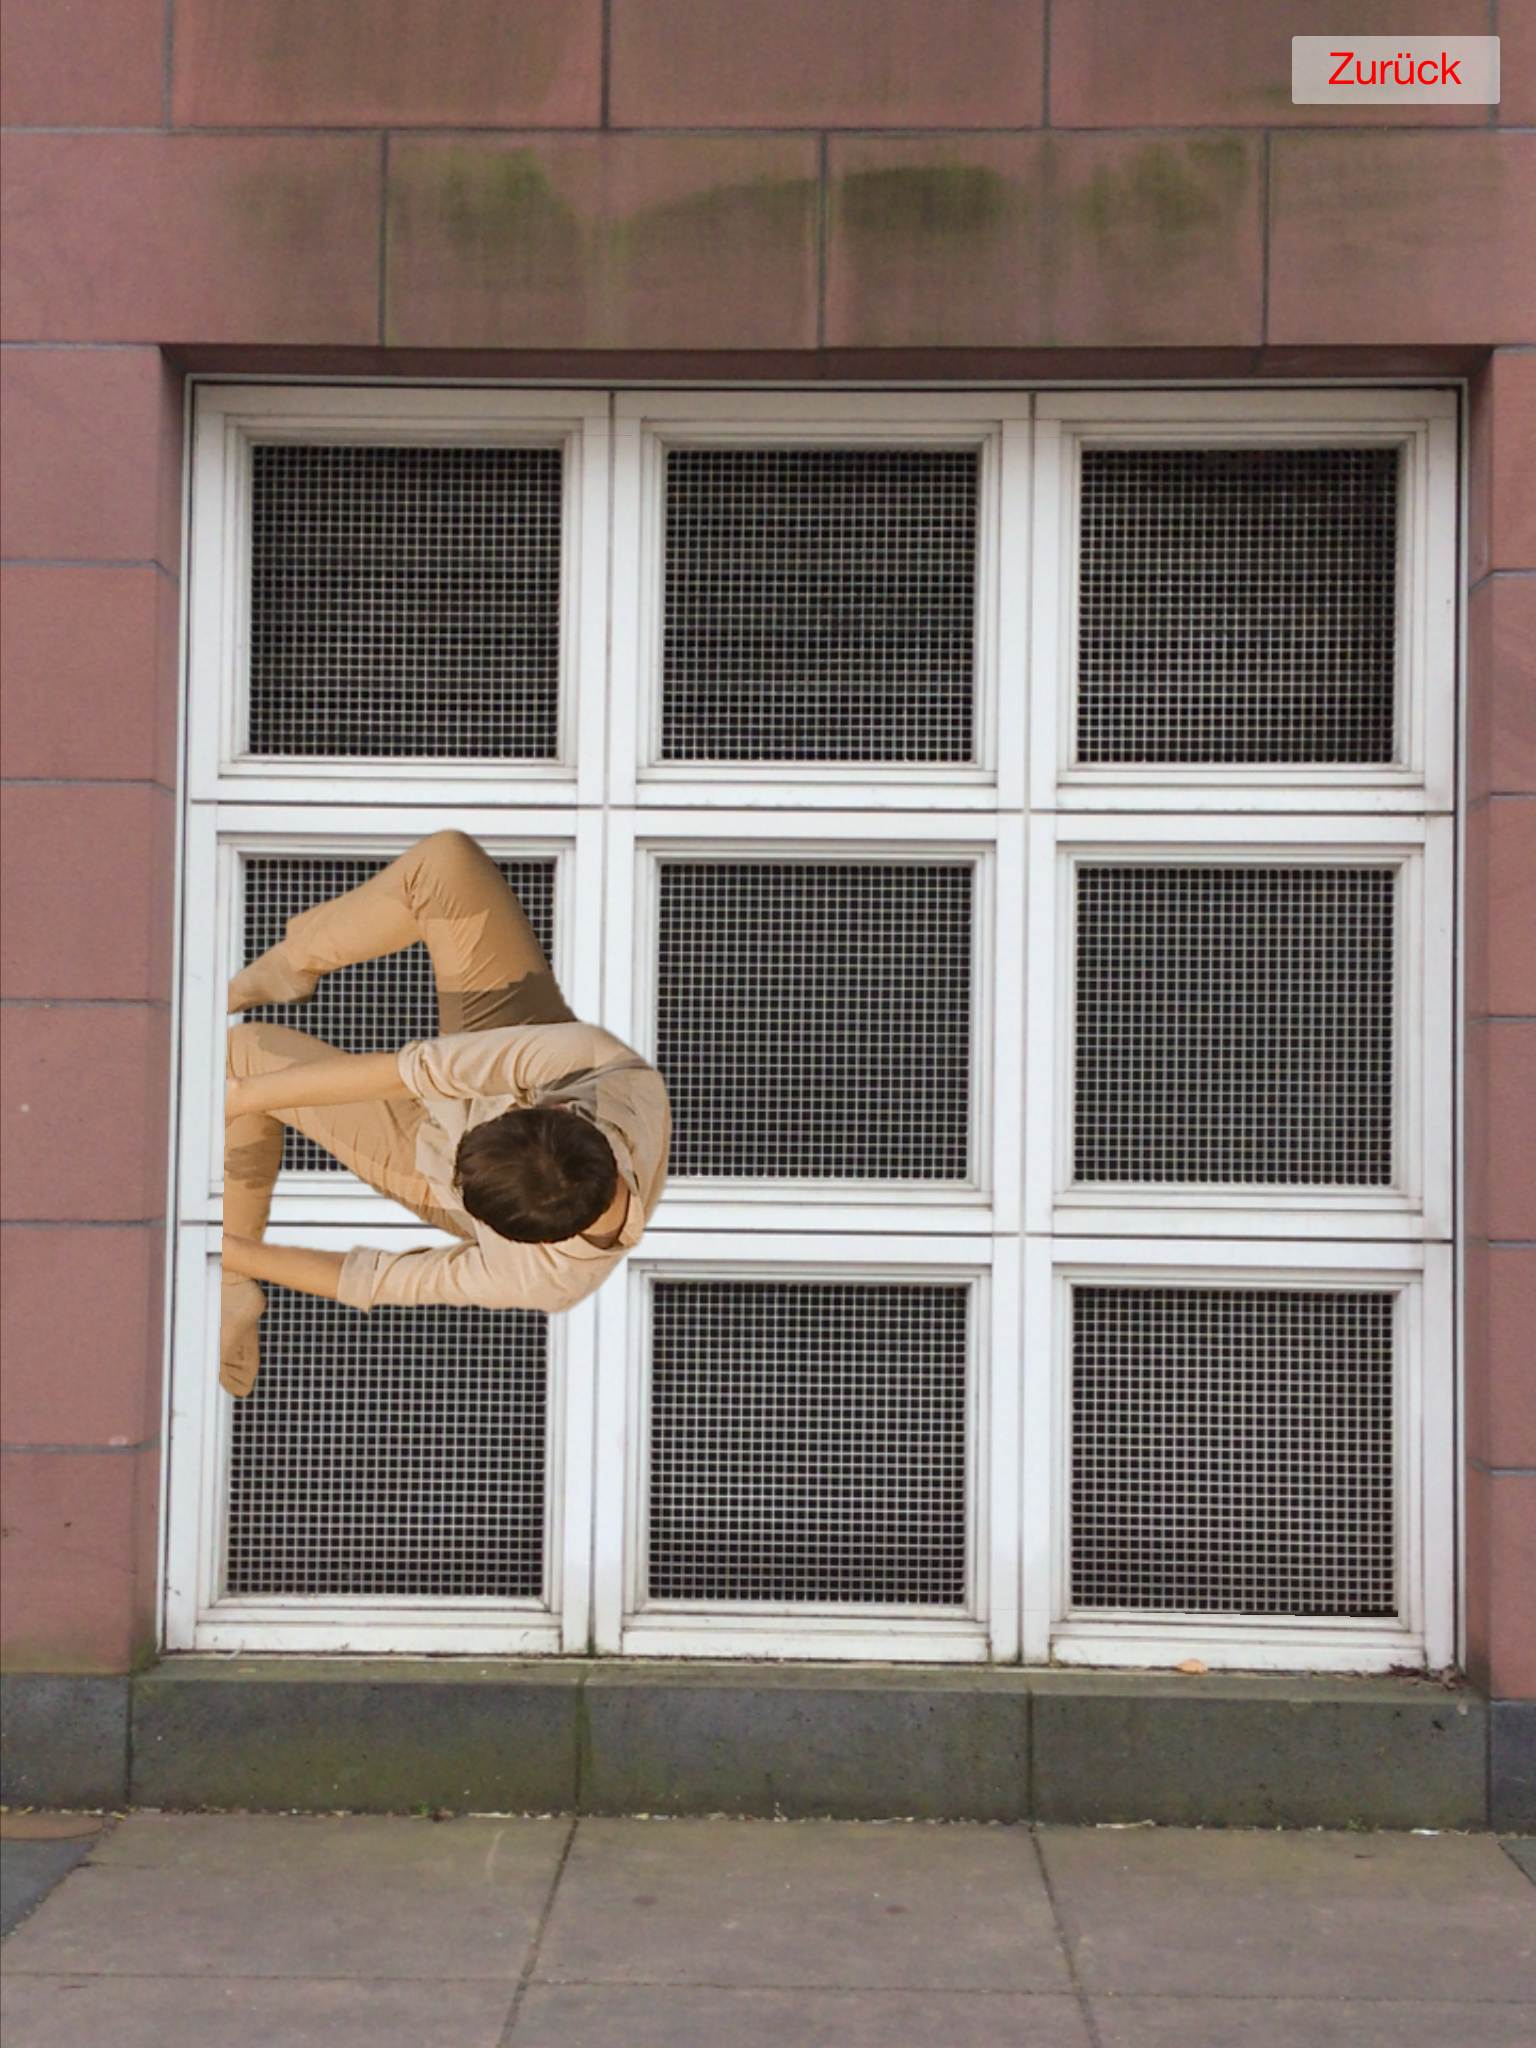 Window of the Badische Landesbibliothek Karlsruhe showing a dancer.